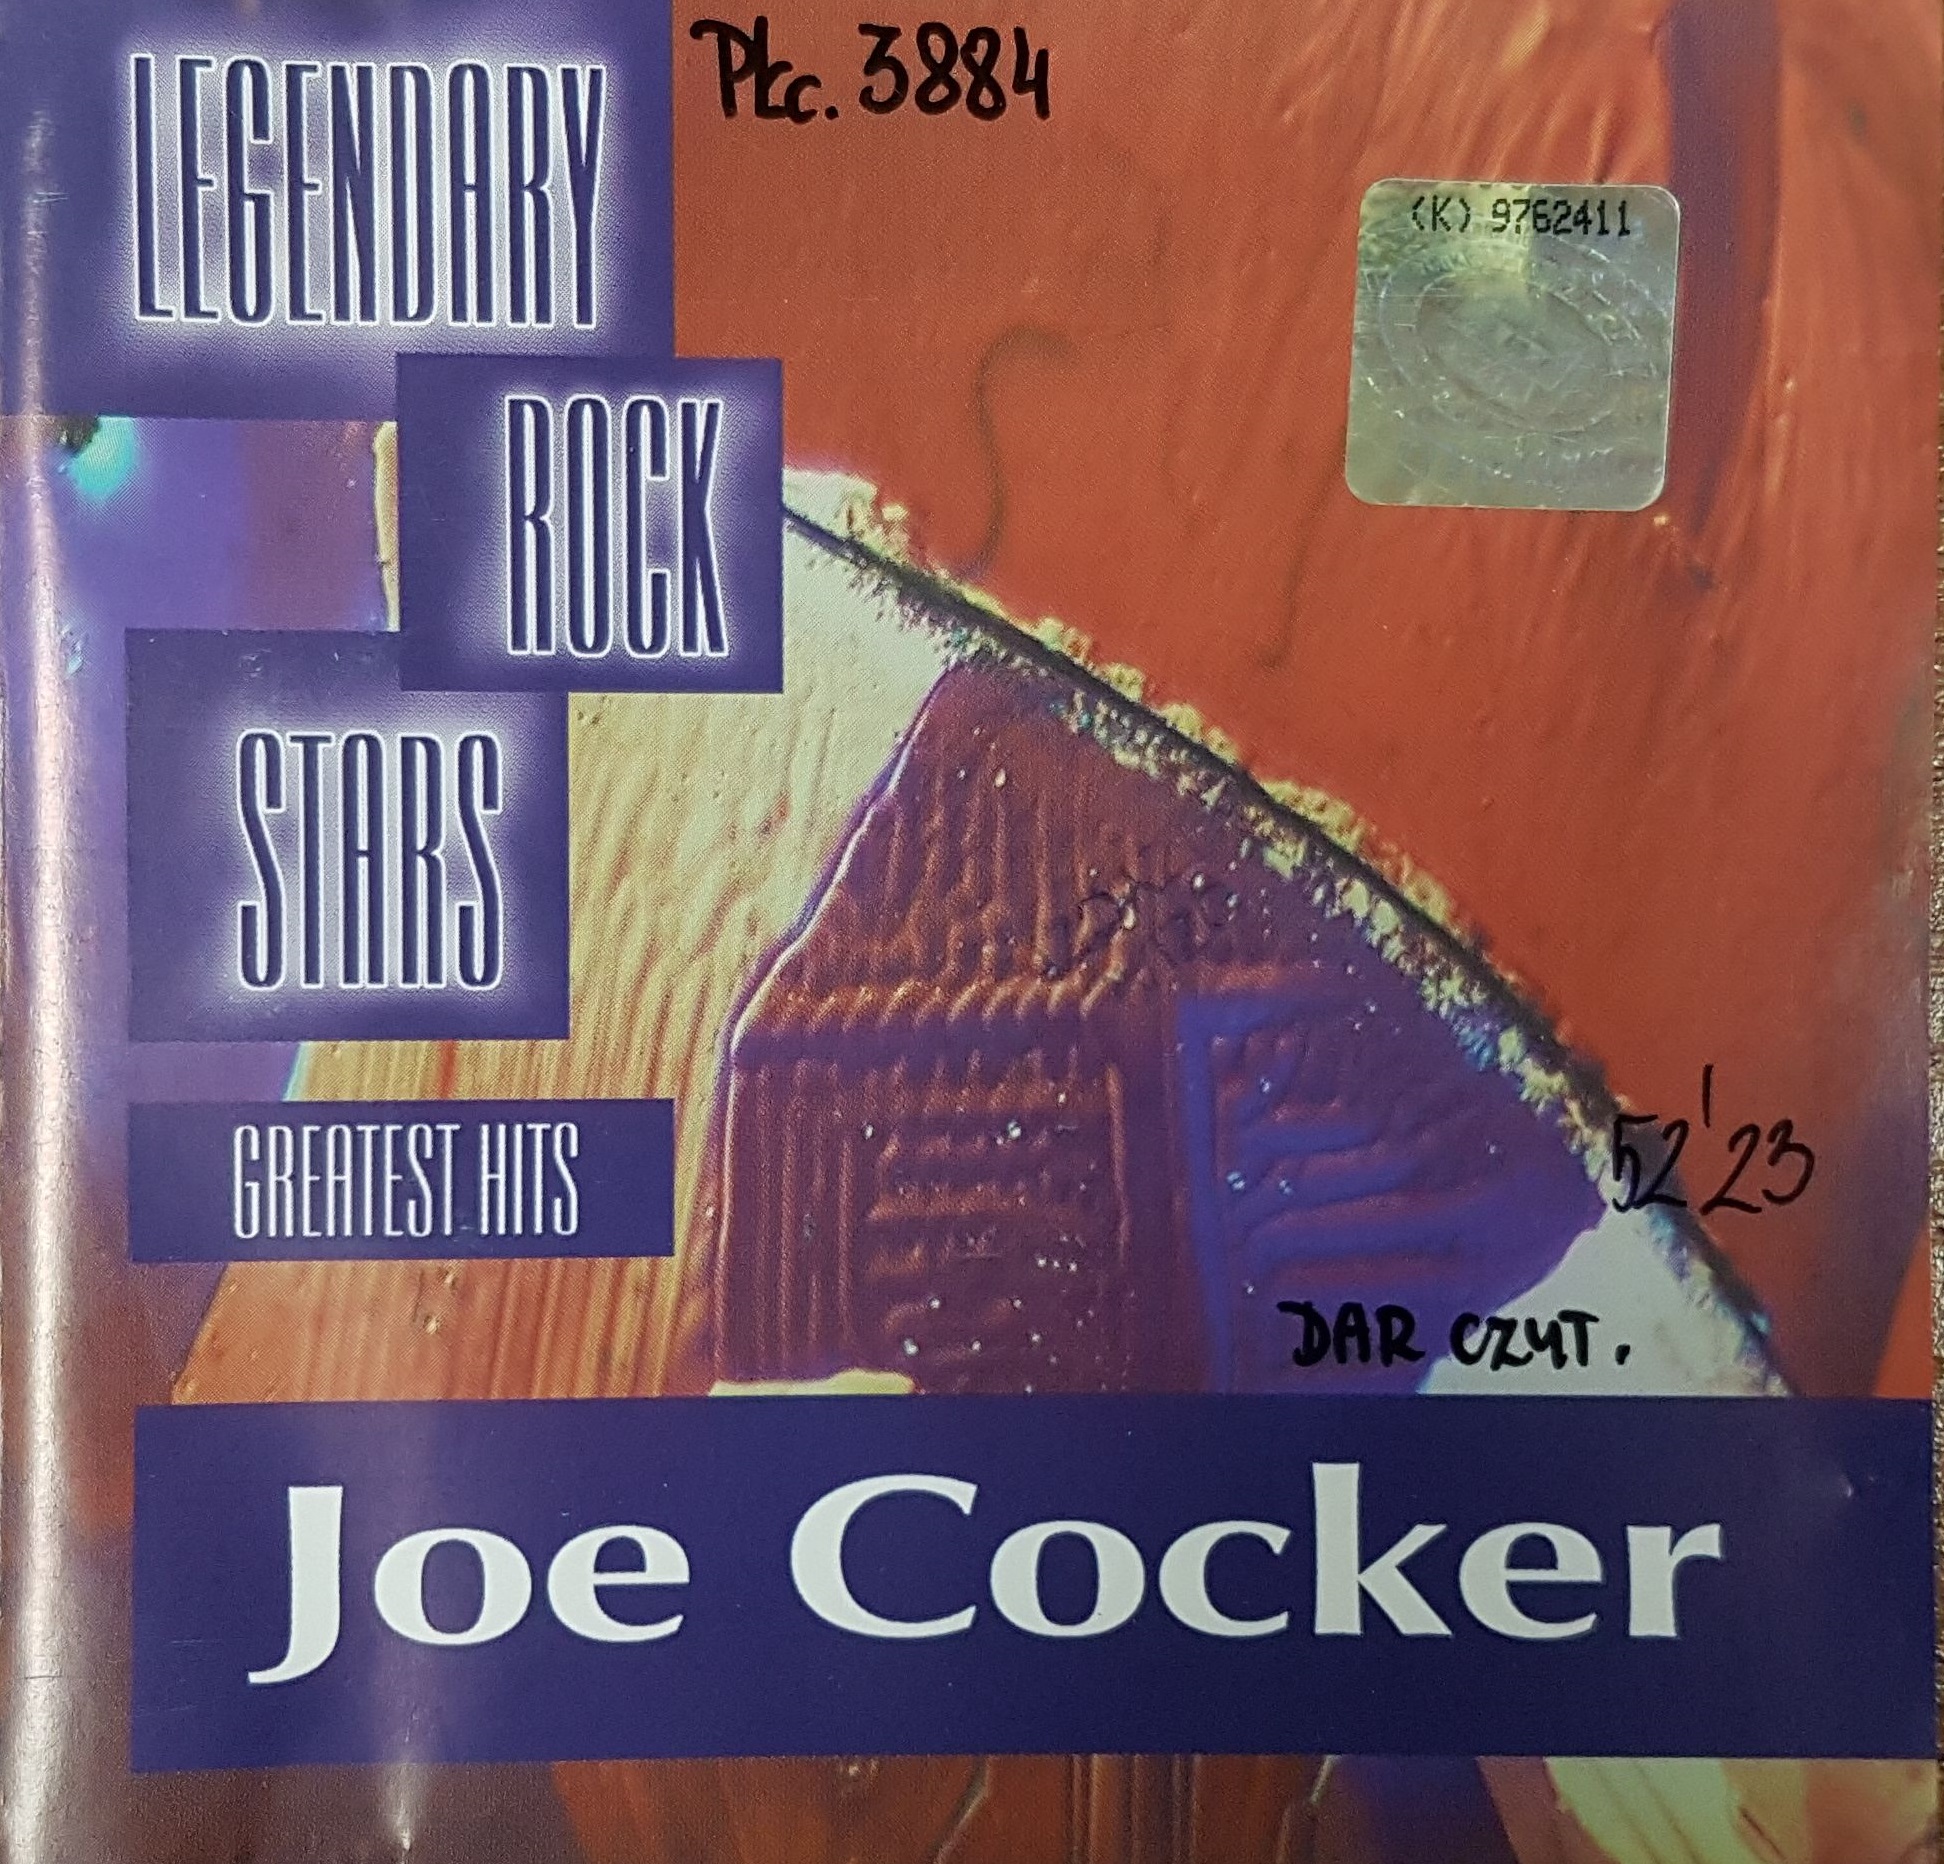 Cocker Joe – Legendary Rock Stars